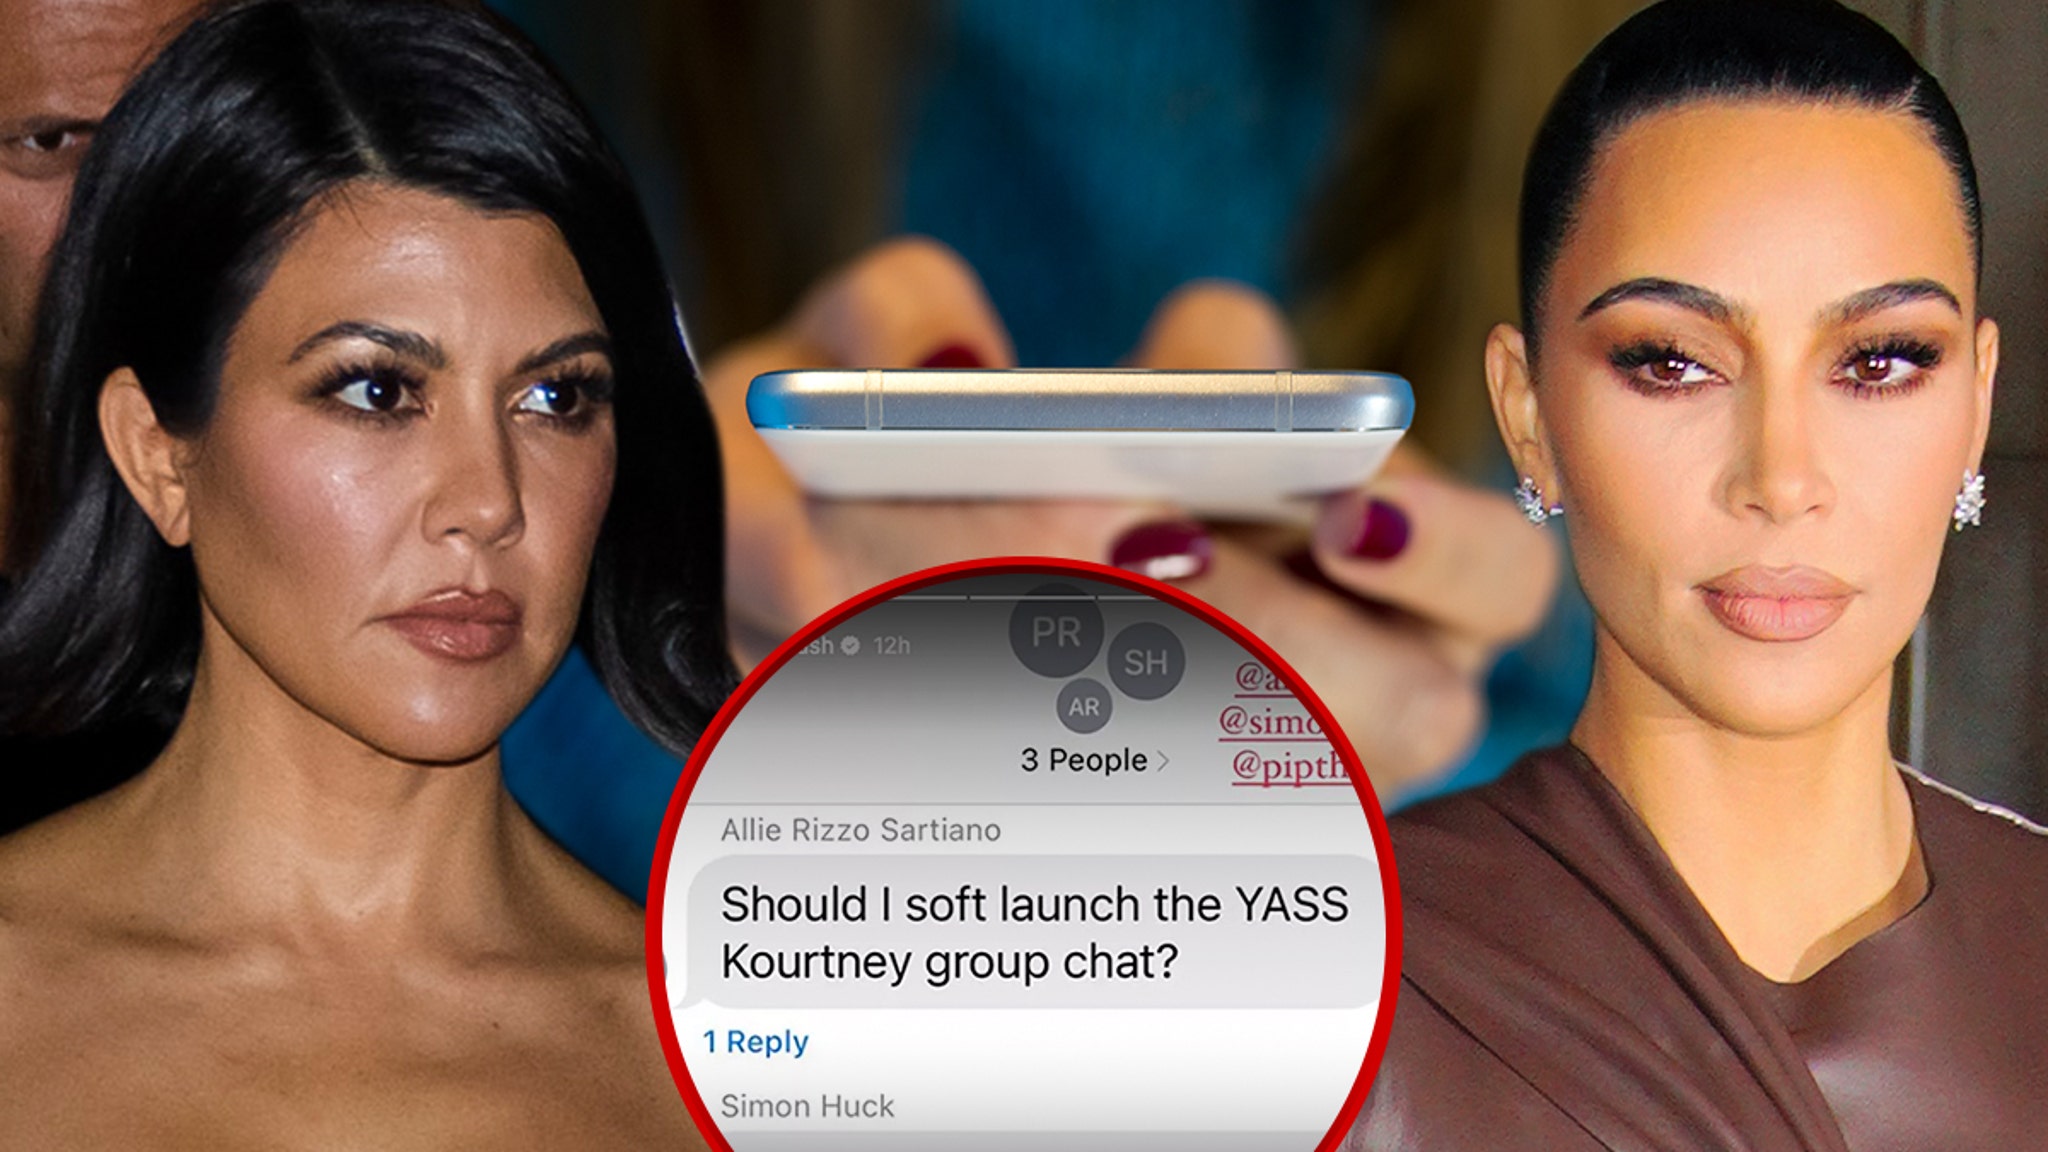 Kourtney Kardashian finaliza el chat grupal de Kim y sus amigos la apoyan